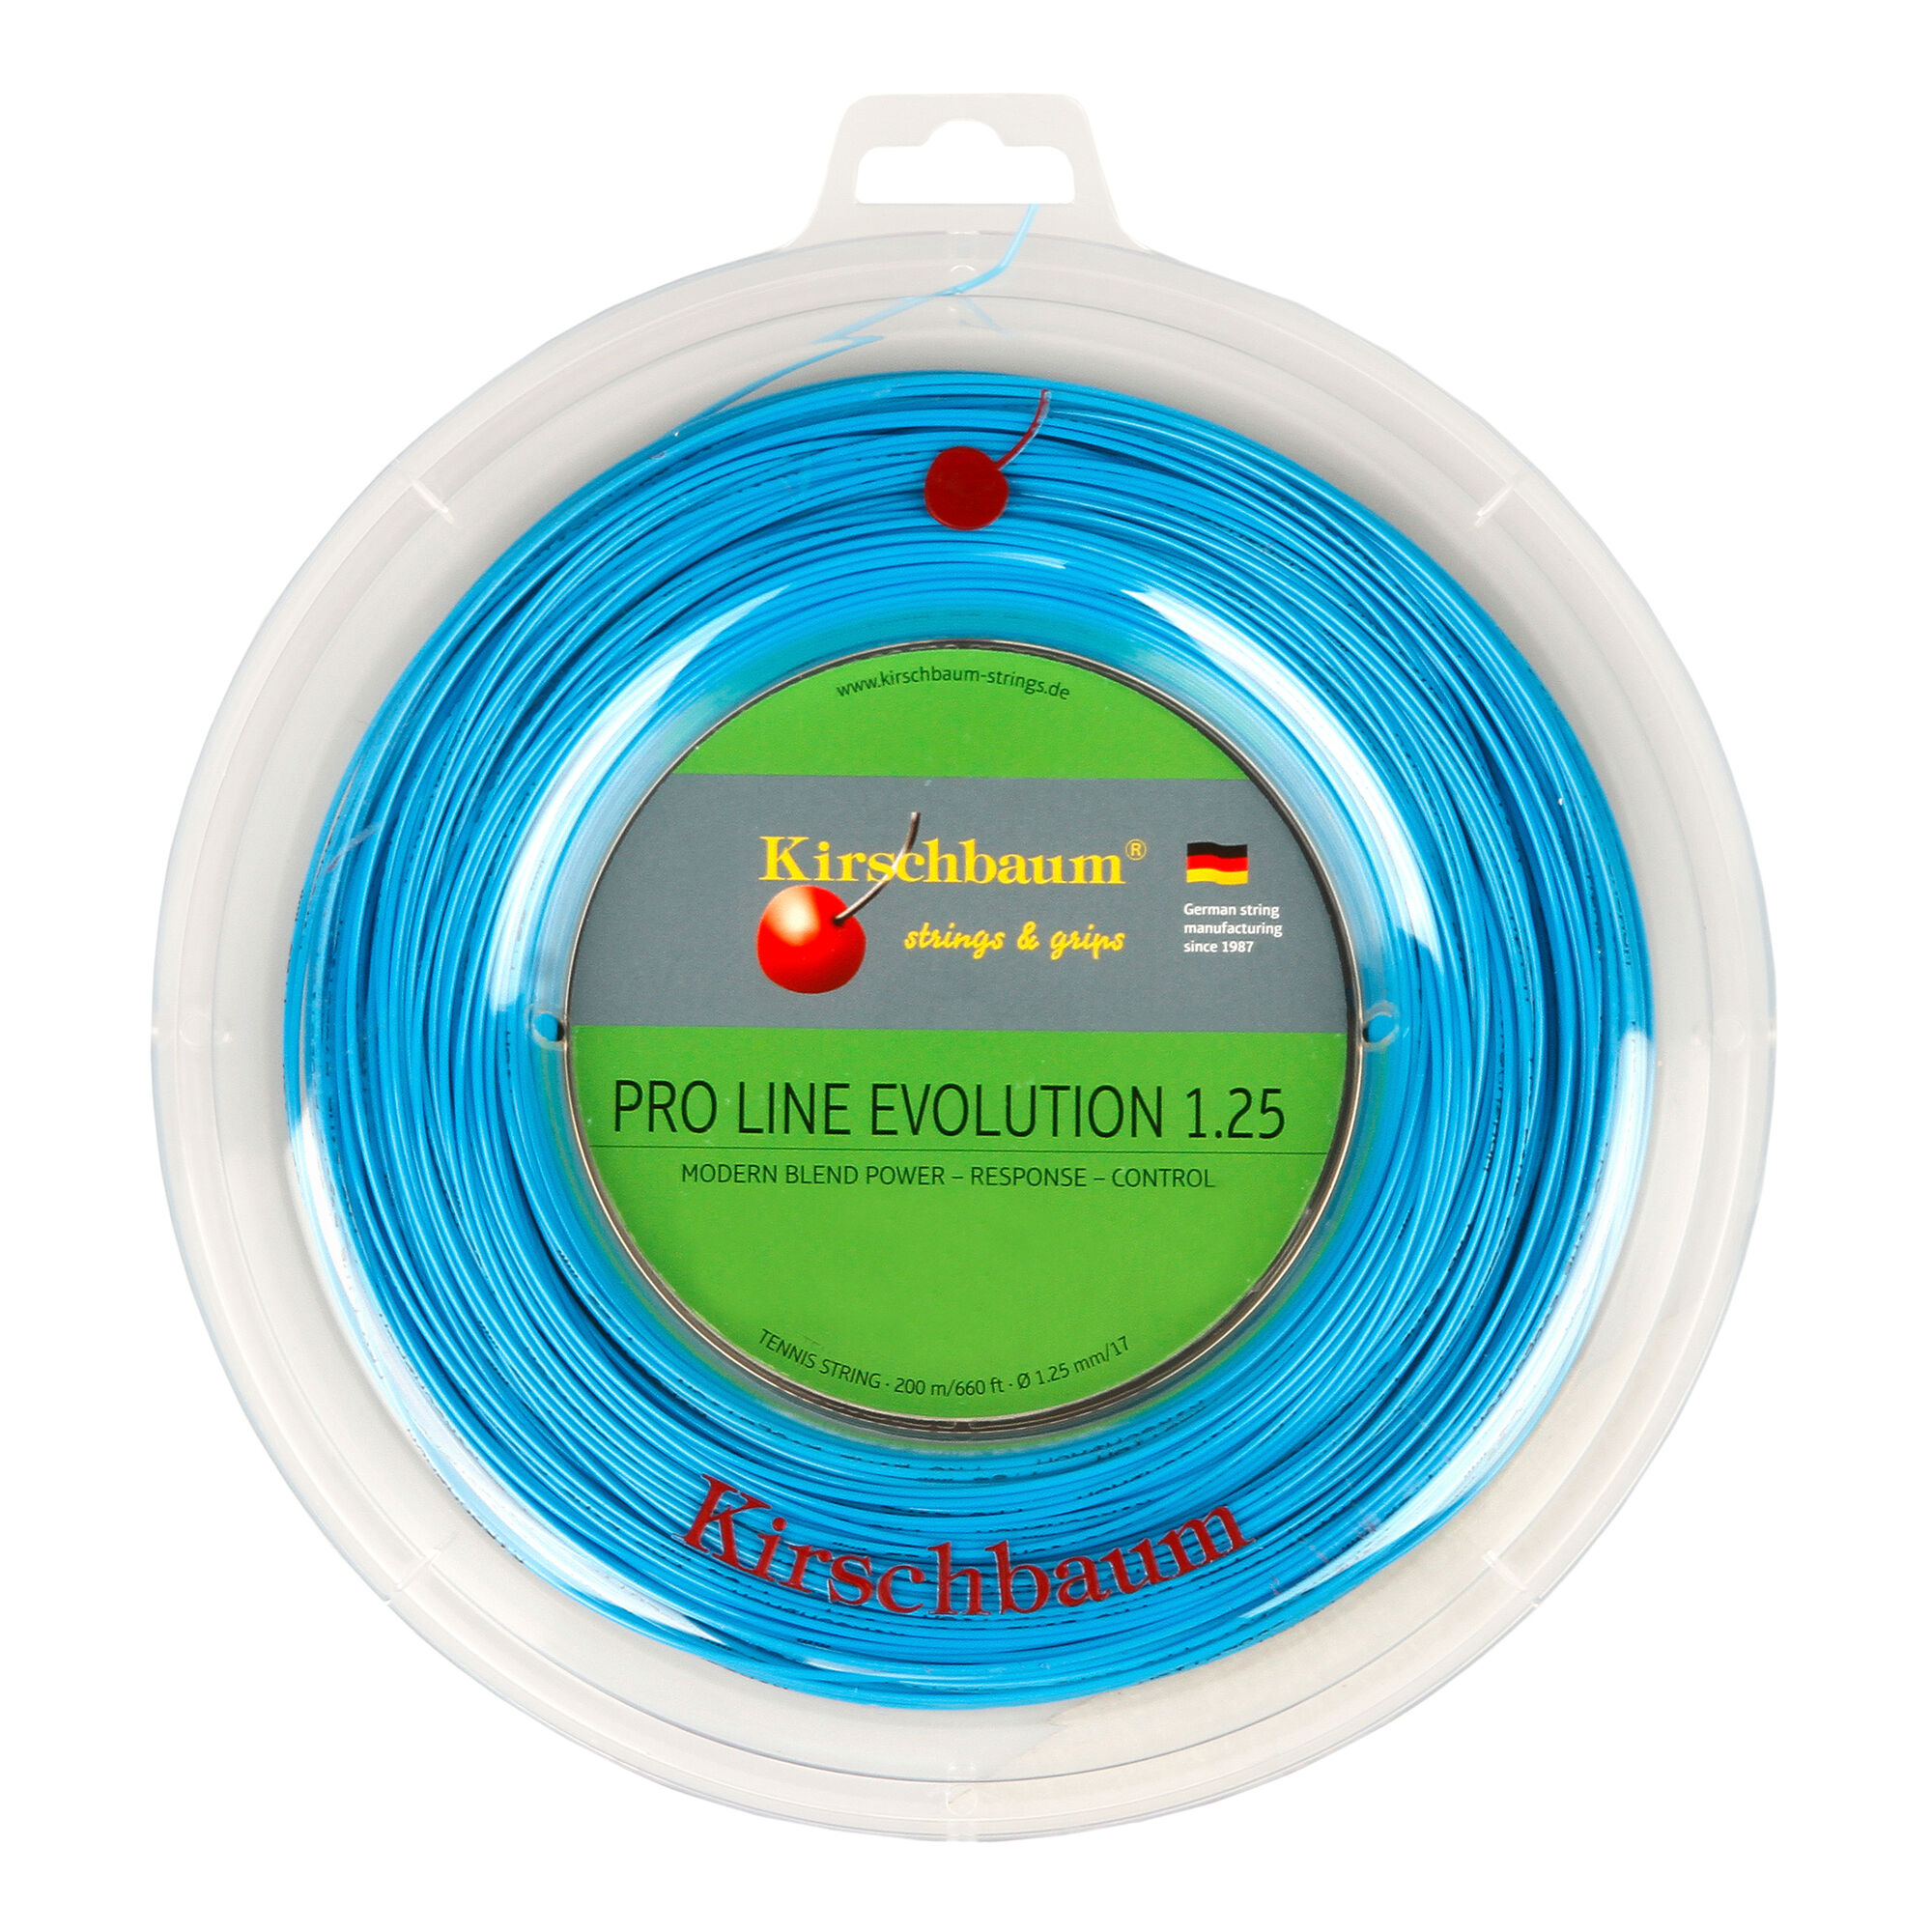 Buy Kirschbaum Pro Line Evolution String Reel 200m Blue online